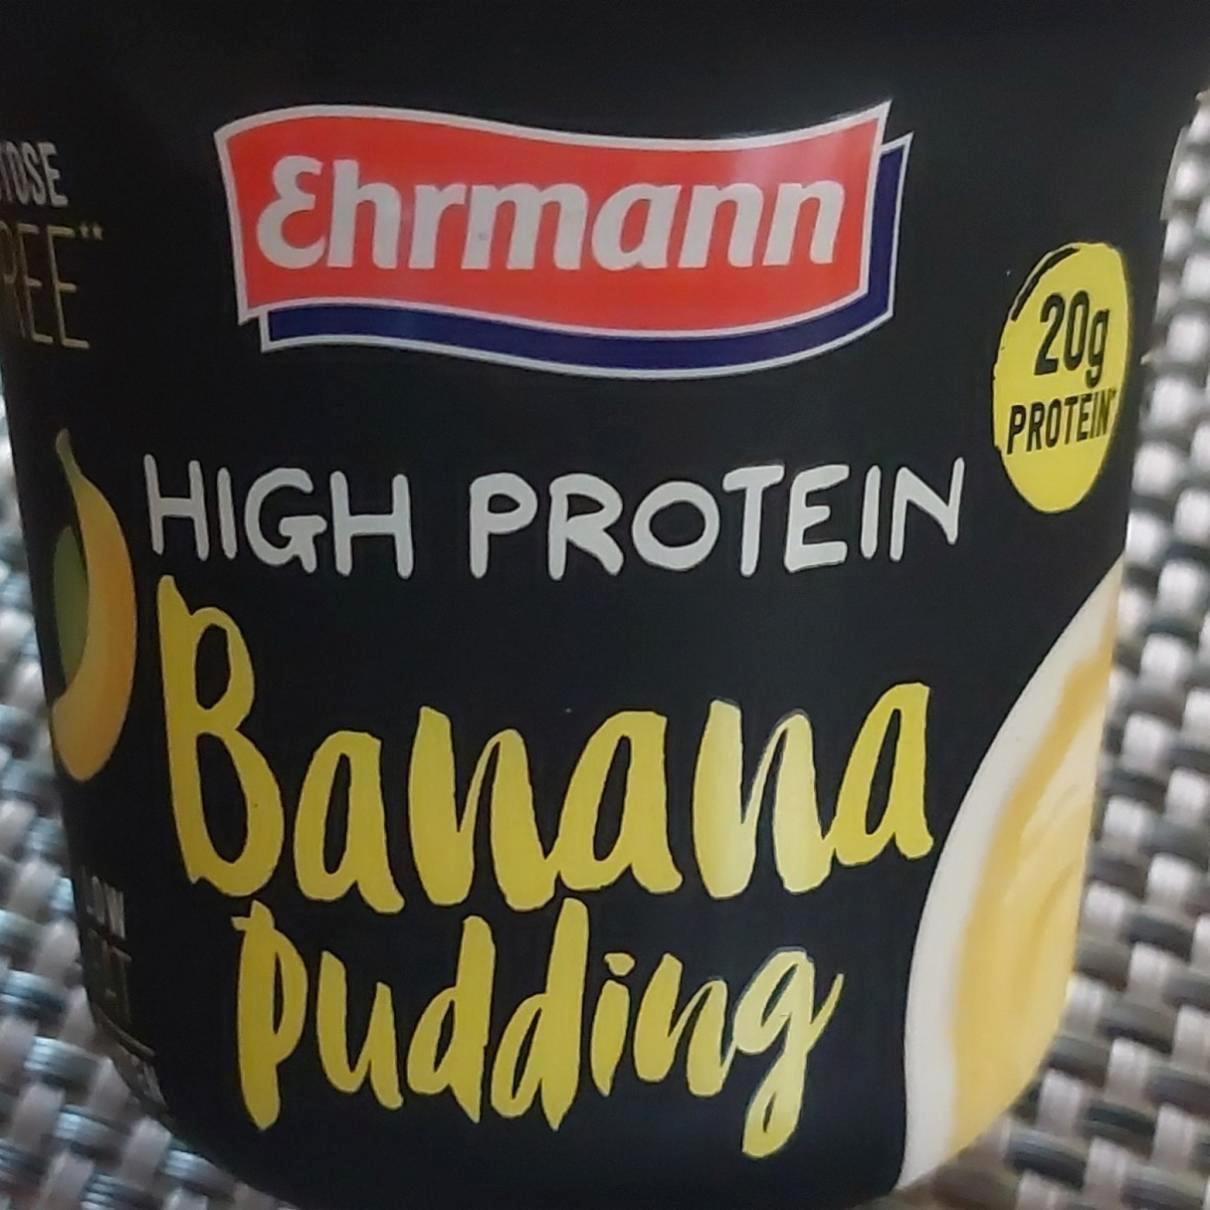 Képek - High protein Banános puding Ehrmann